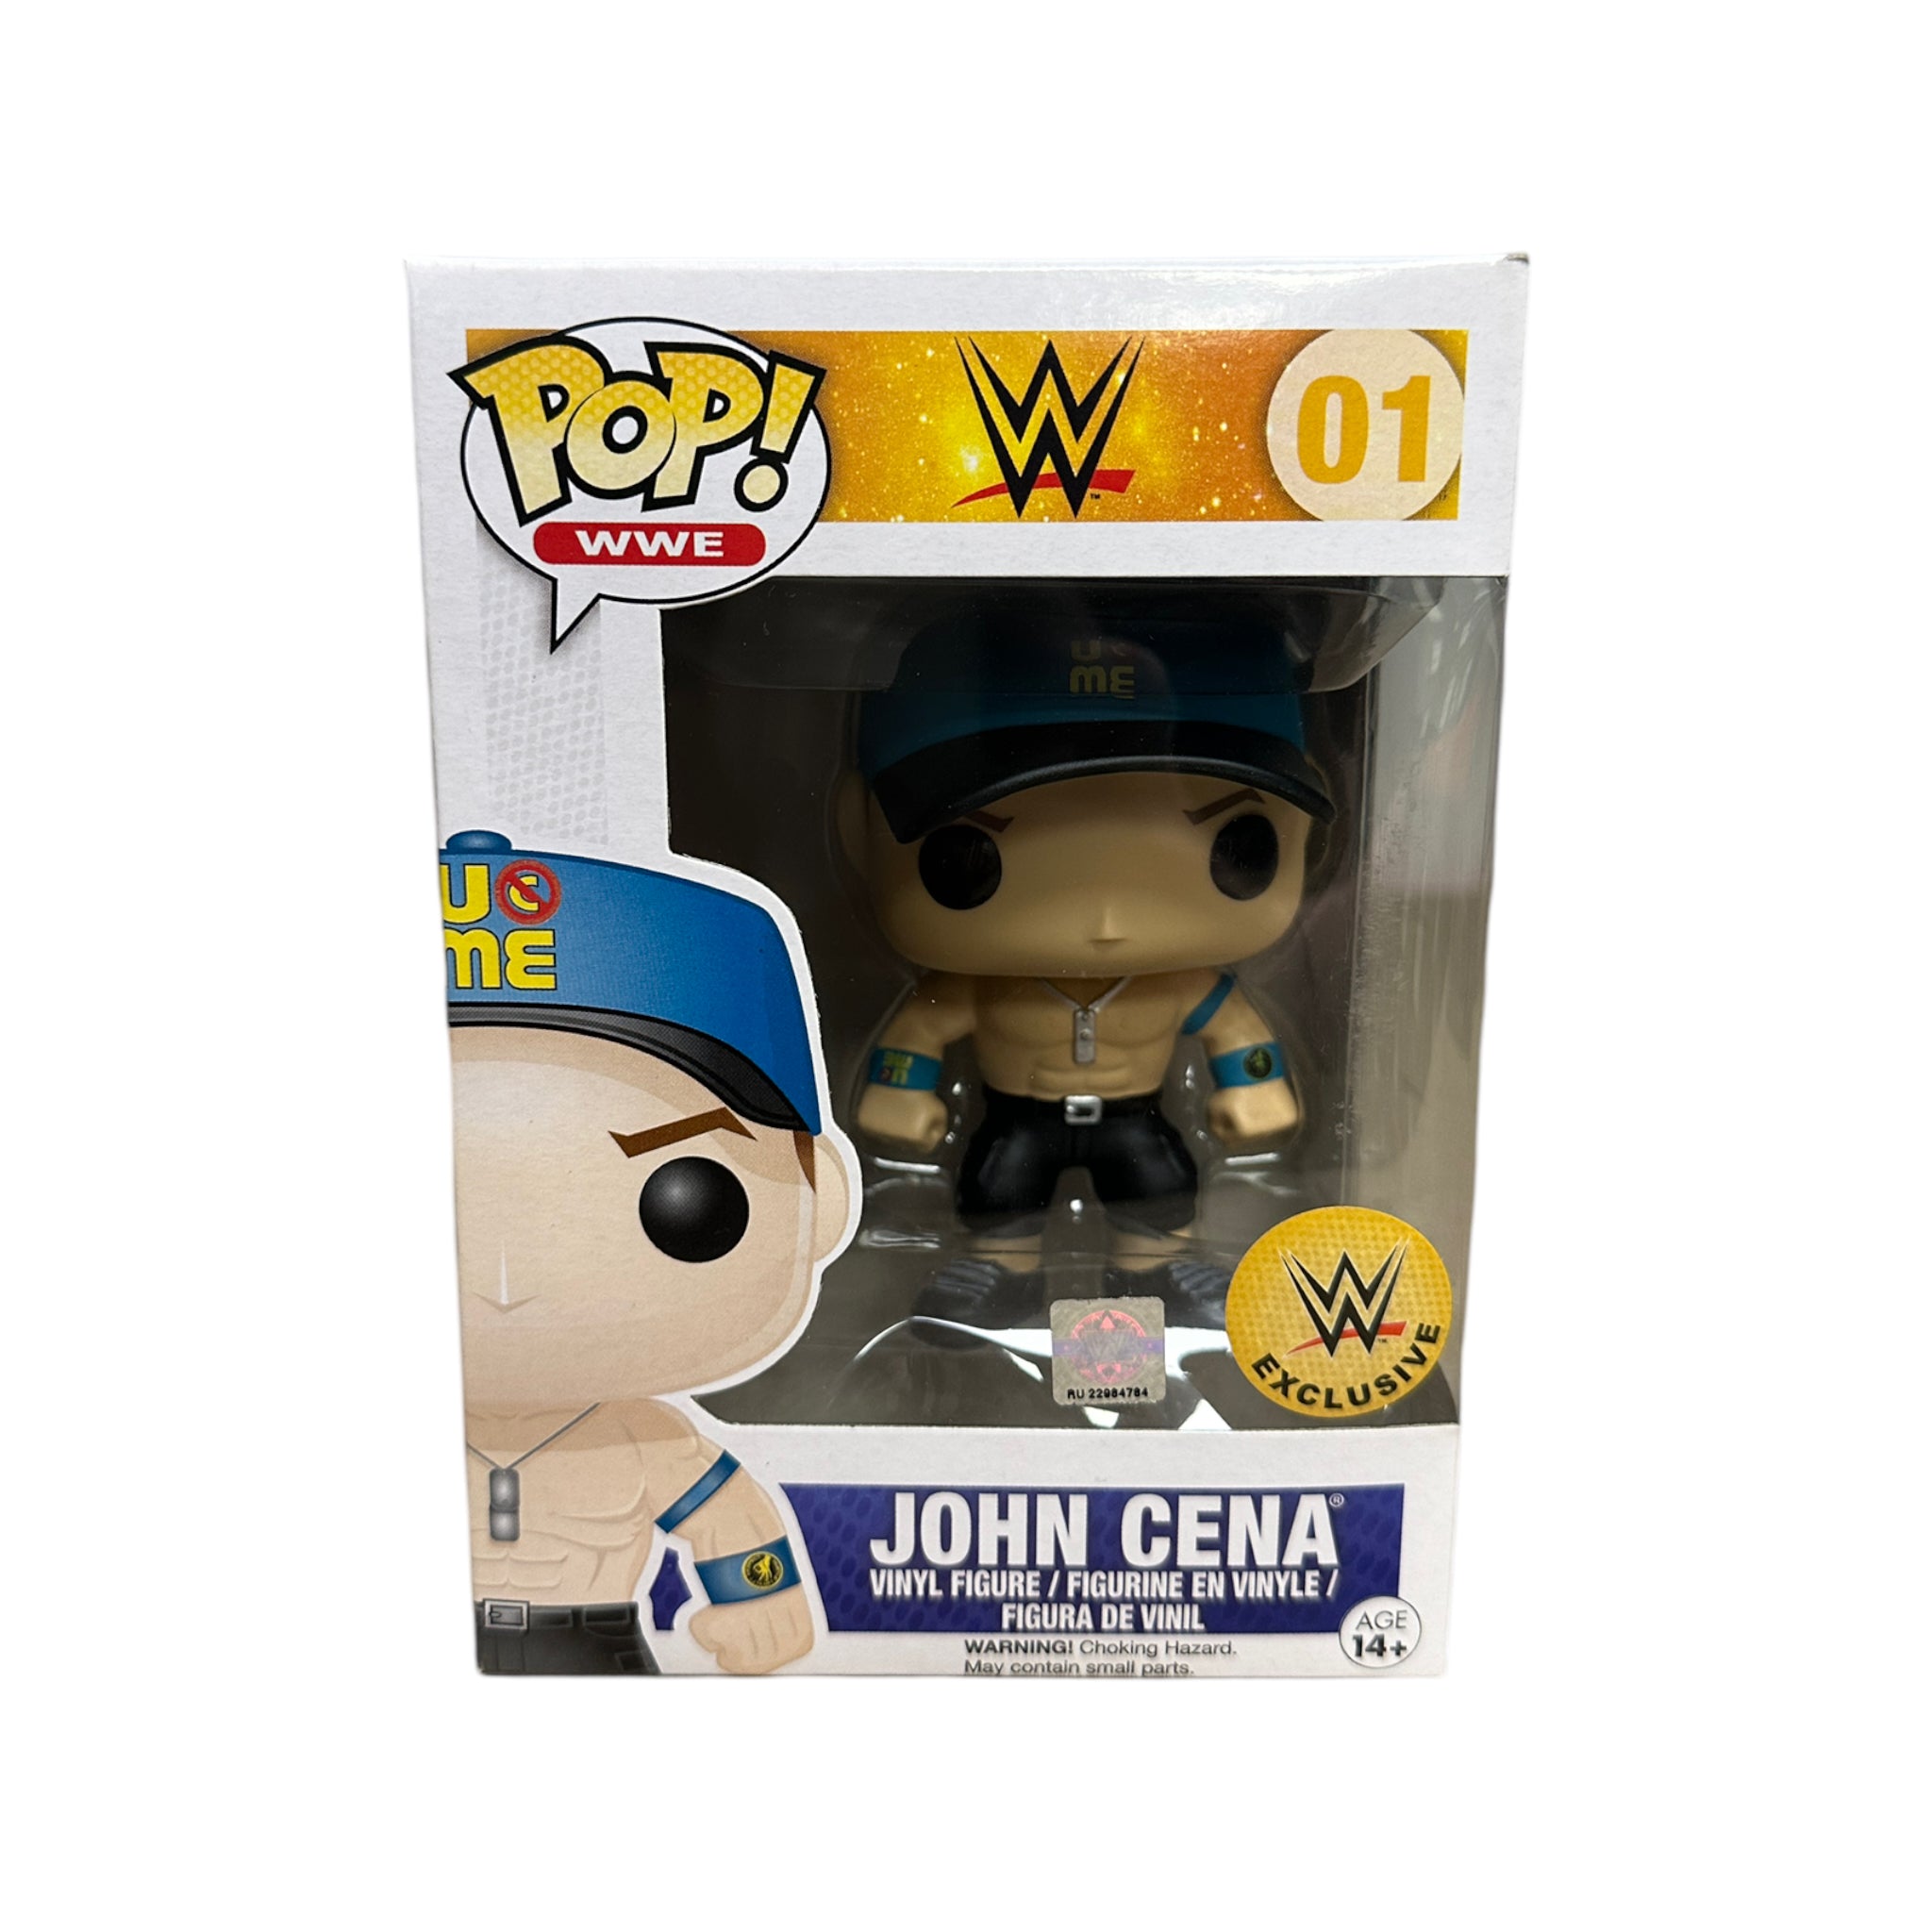 John Cena #01 (Black Pants) Funko Pop! - WWE - World Wrestling Entertainment Exclusive - Condition 8/10